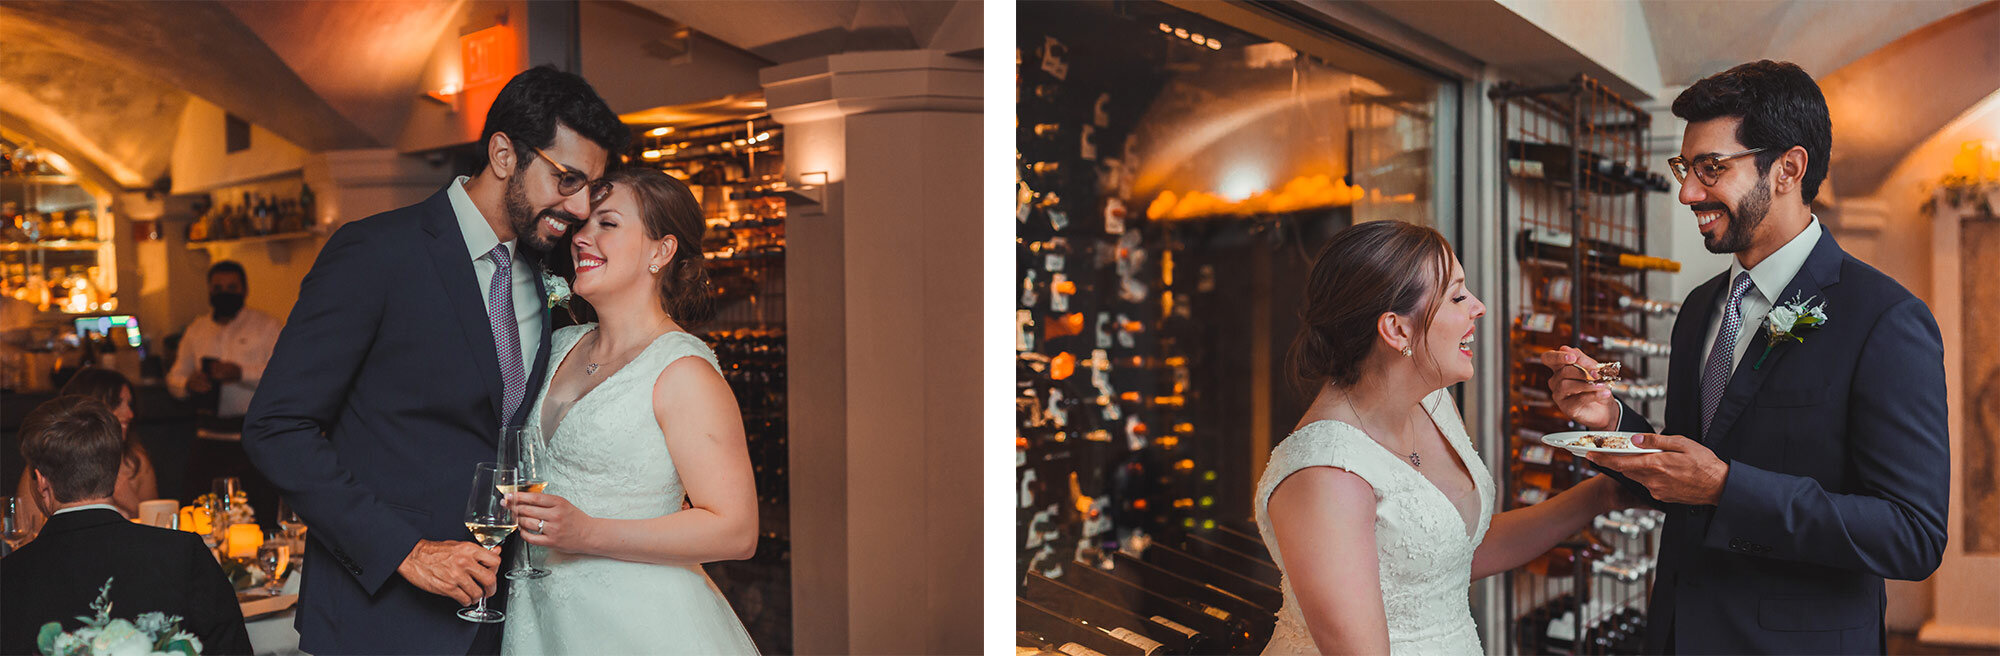 MOOO.... Restaurant Wine Cellar Wedding | Stephen Grant Photography